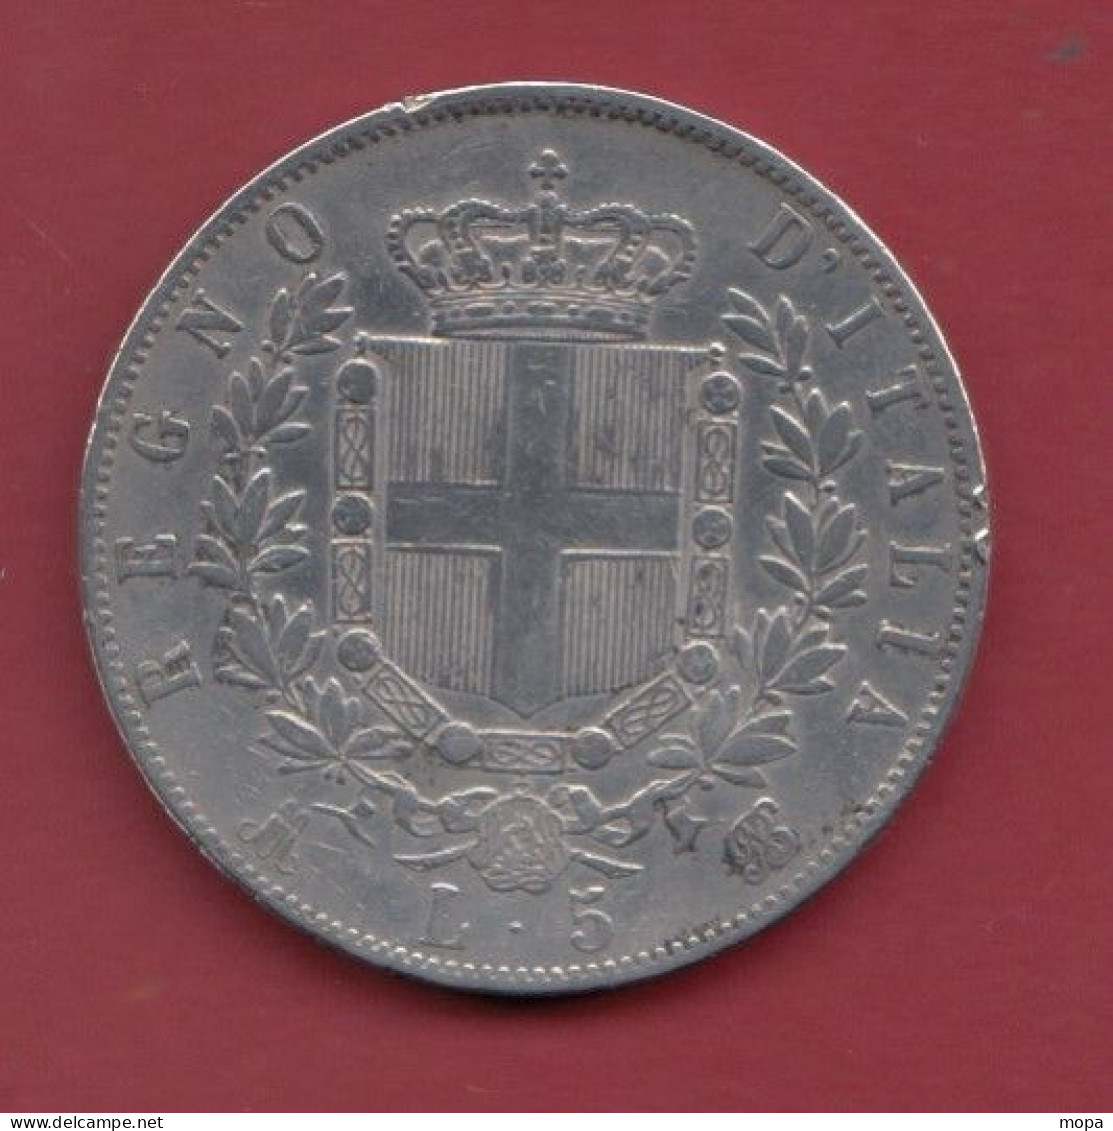 5 Lires (Argent)---Victor Emmanuel II--1872M--- Dans L 'état (4) - 1861-1878 : Vittoro Emanuele II